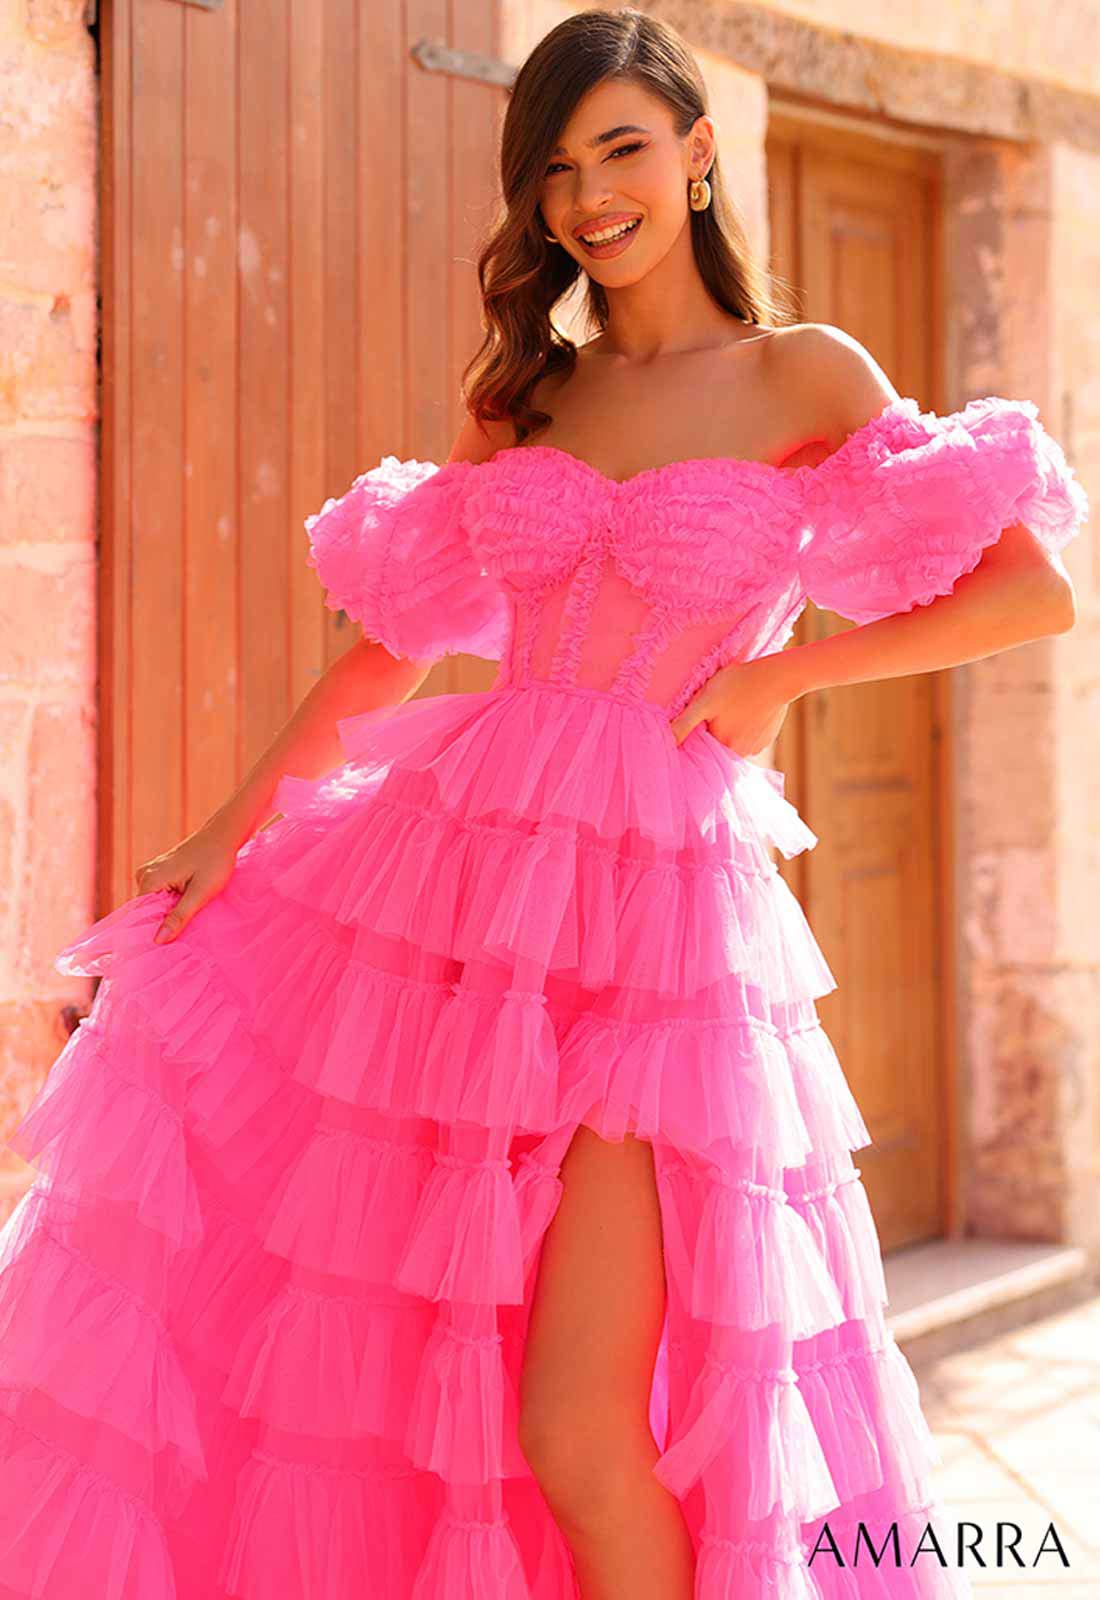 Amarra Pink Greta Tulle Frill Dress